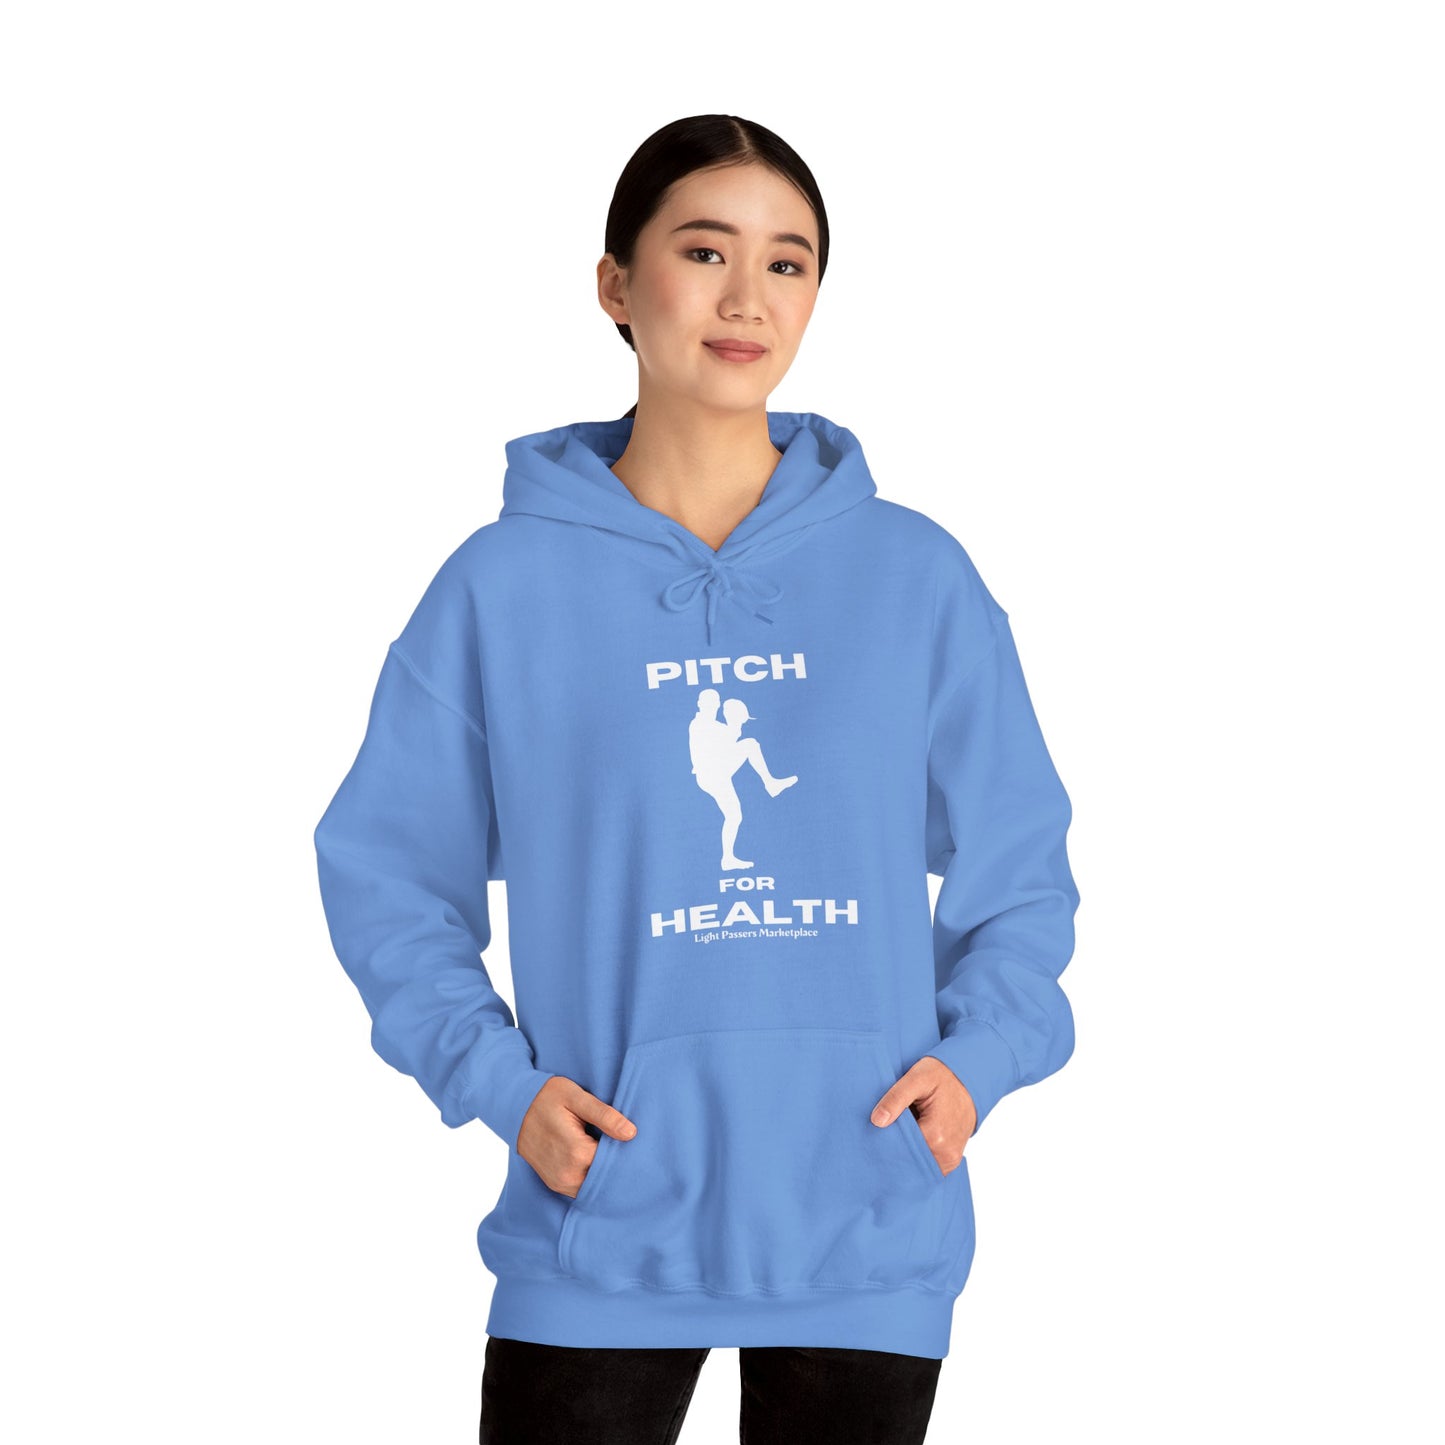 Light Passers Marketplace Pitch Health Unisex Hooded Sweatshirt Fitness